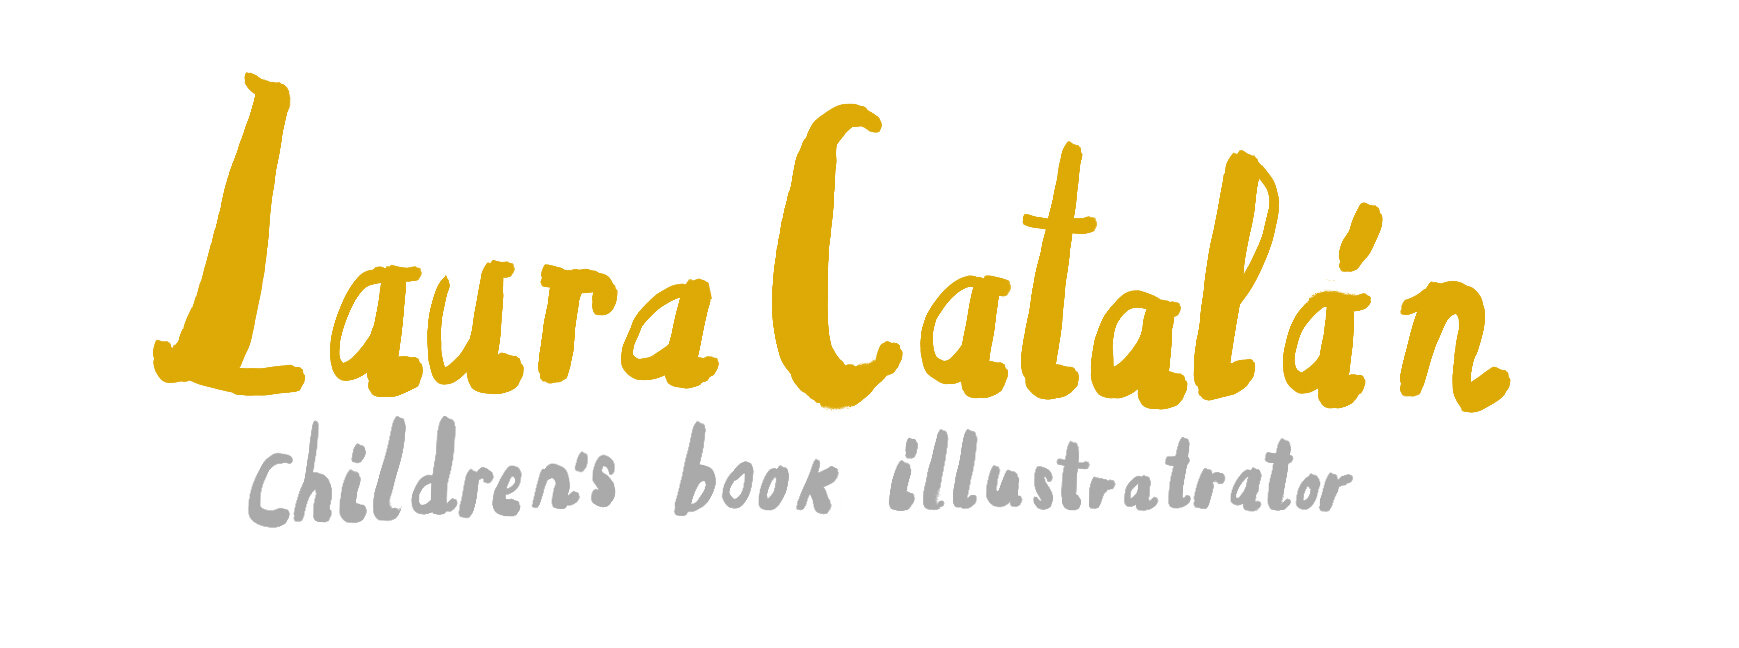 Laura Catalán illustrator